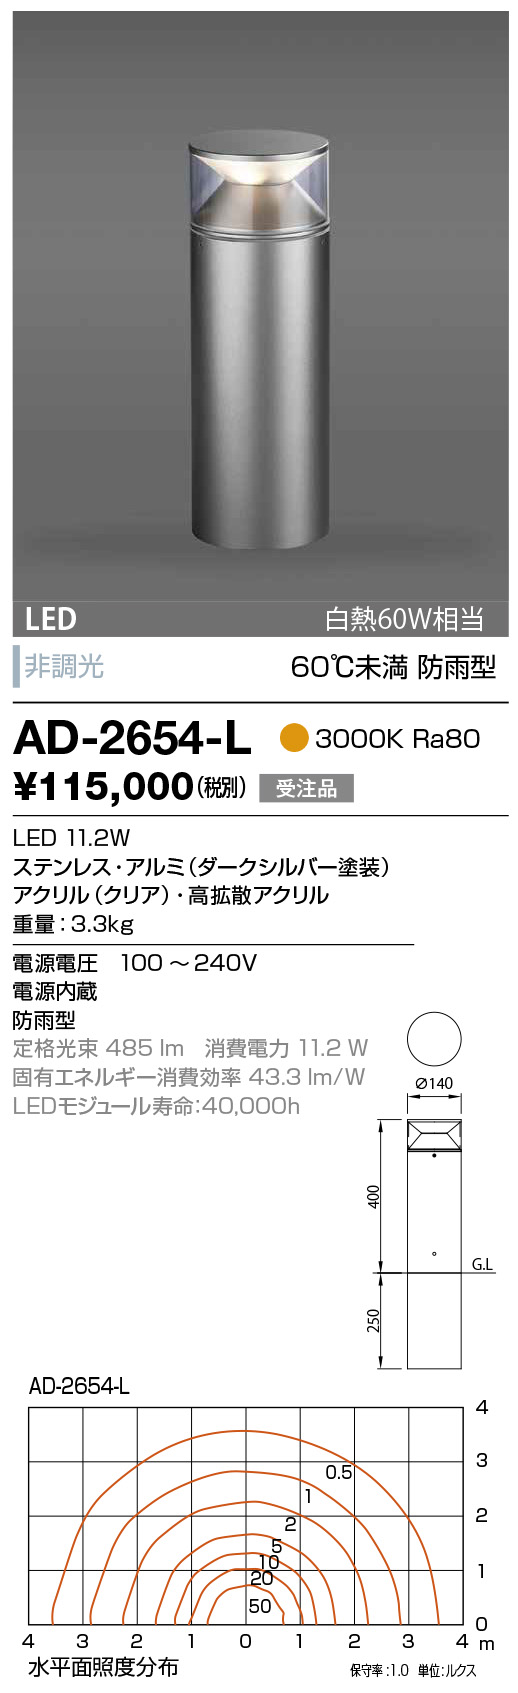 AD-2654-L(山田照明) 商品詳細 ～ 照明器具・換気扇他、電設資材販売のブライト